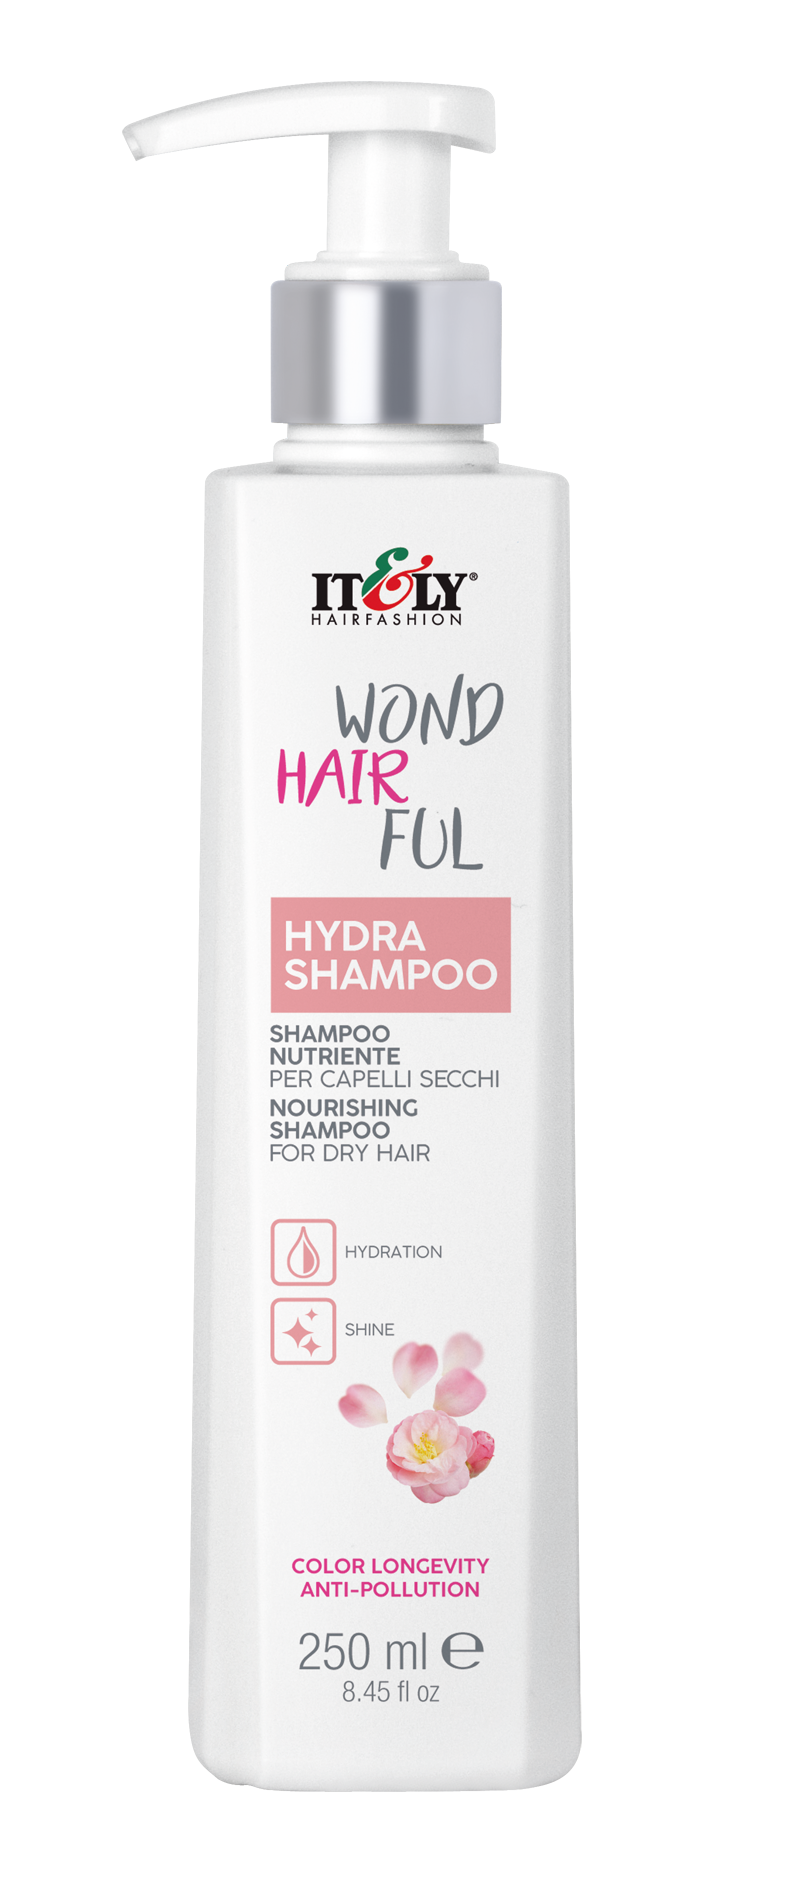 Hydra Shampoo